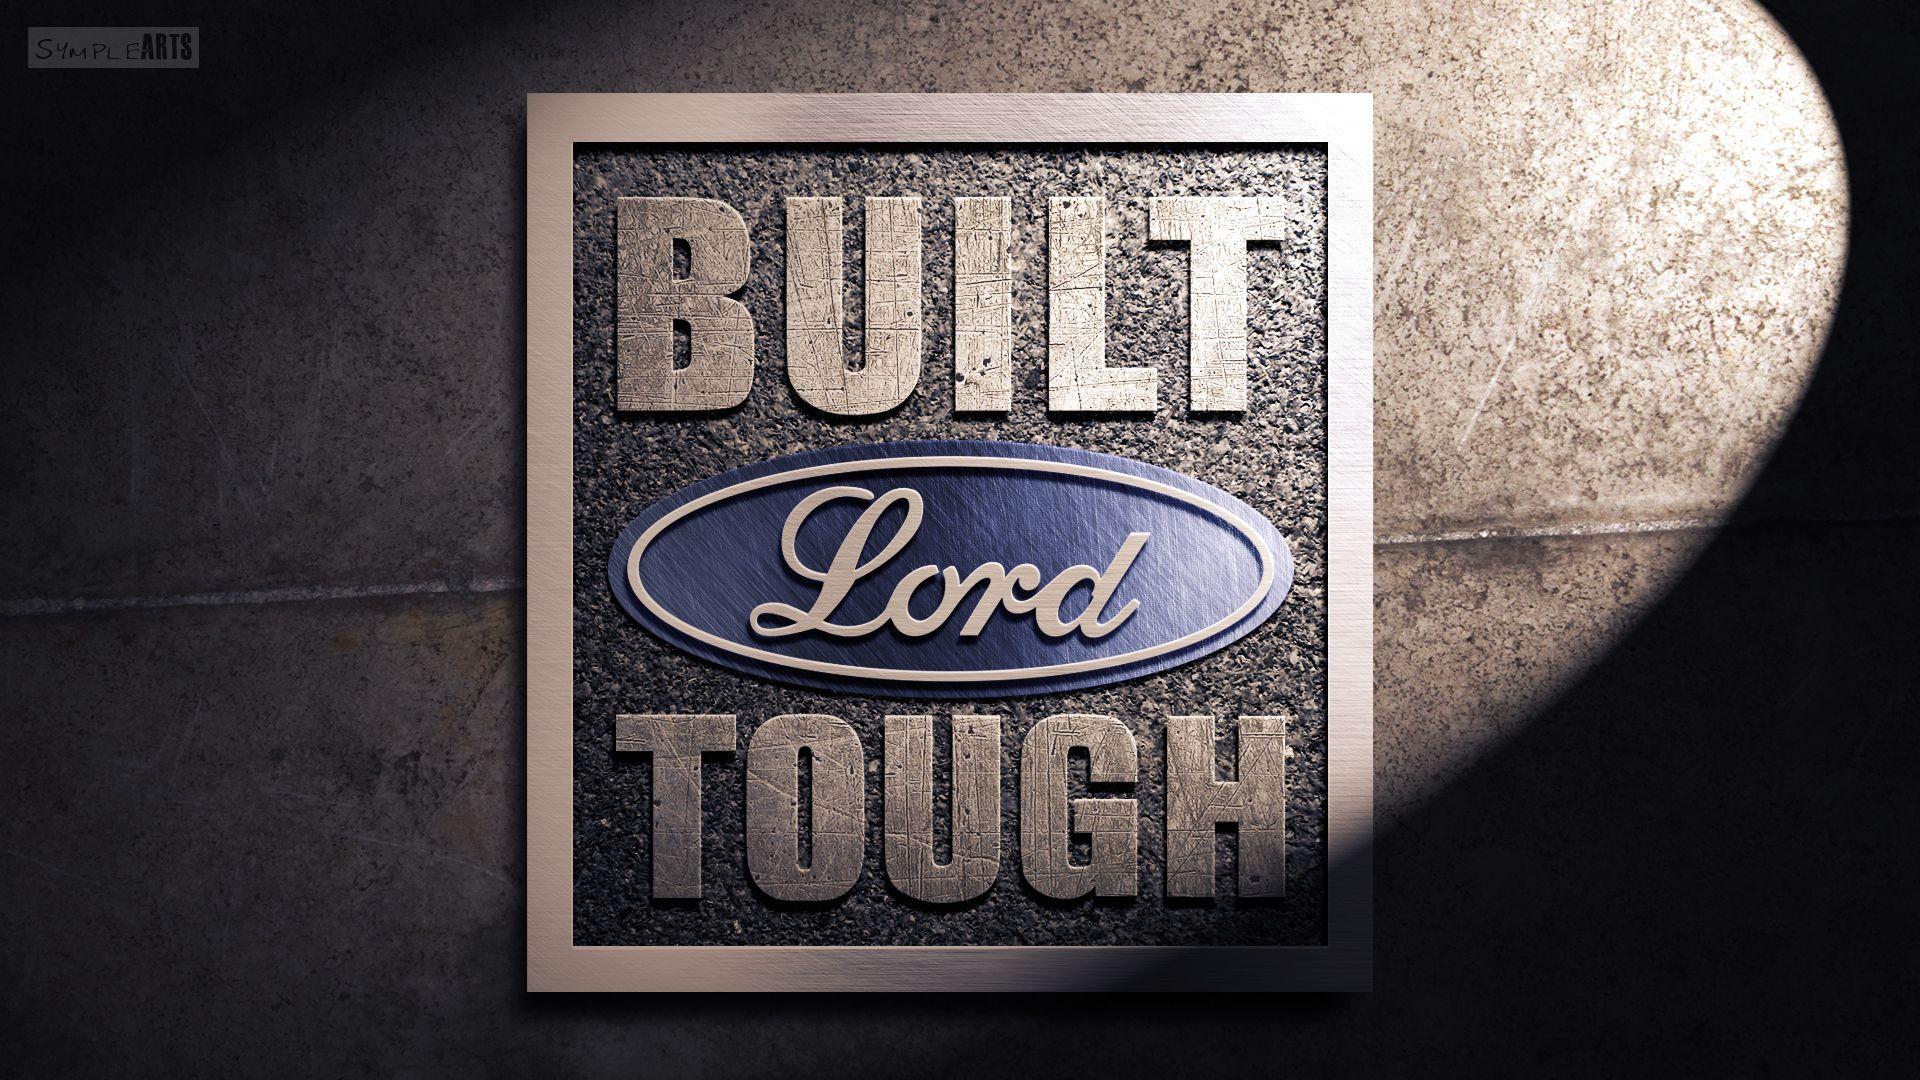 Built Ford Tough Logo Wallpaper. Best Cool Wallpaper HD Download